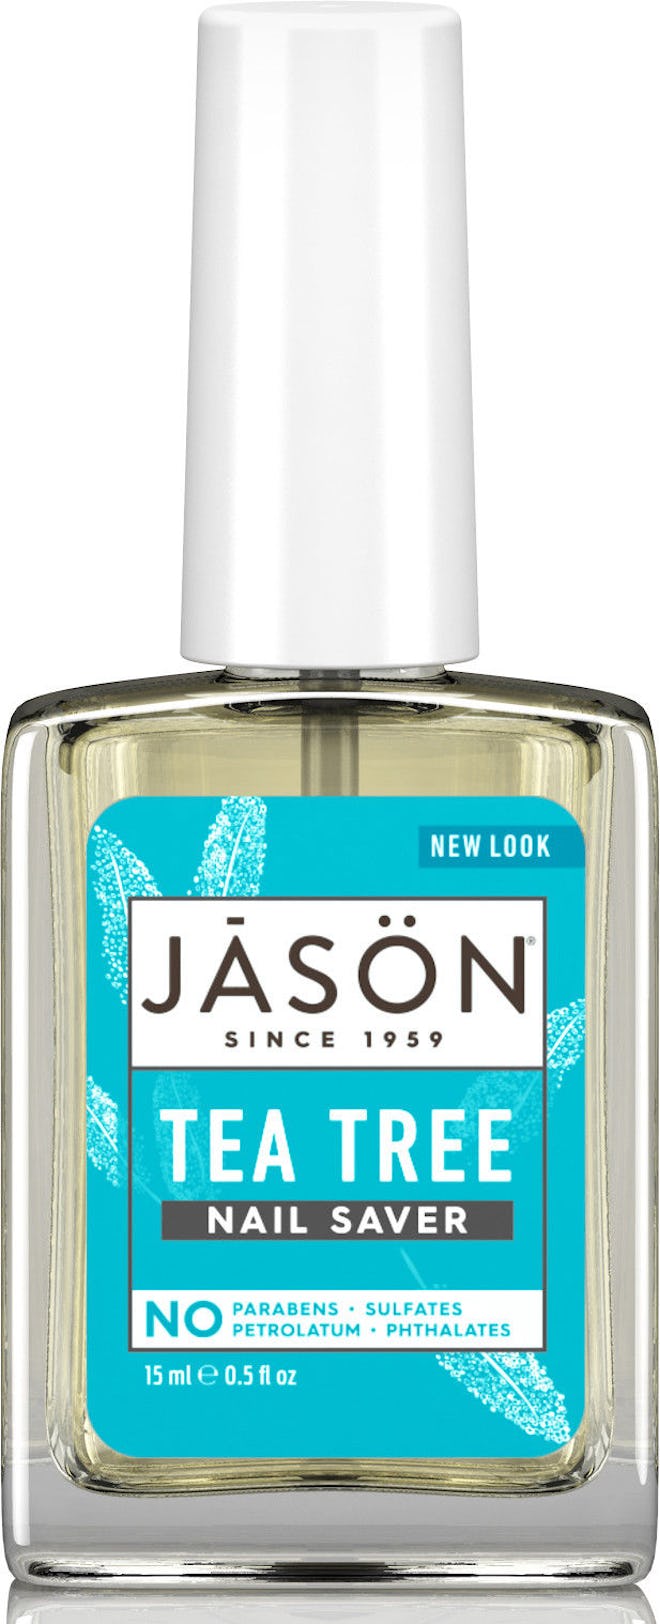 JASON Tea Tree Nail Saver